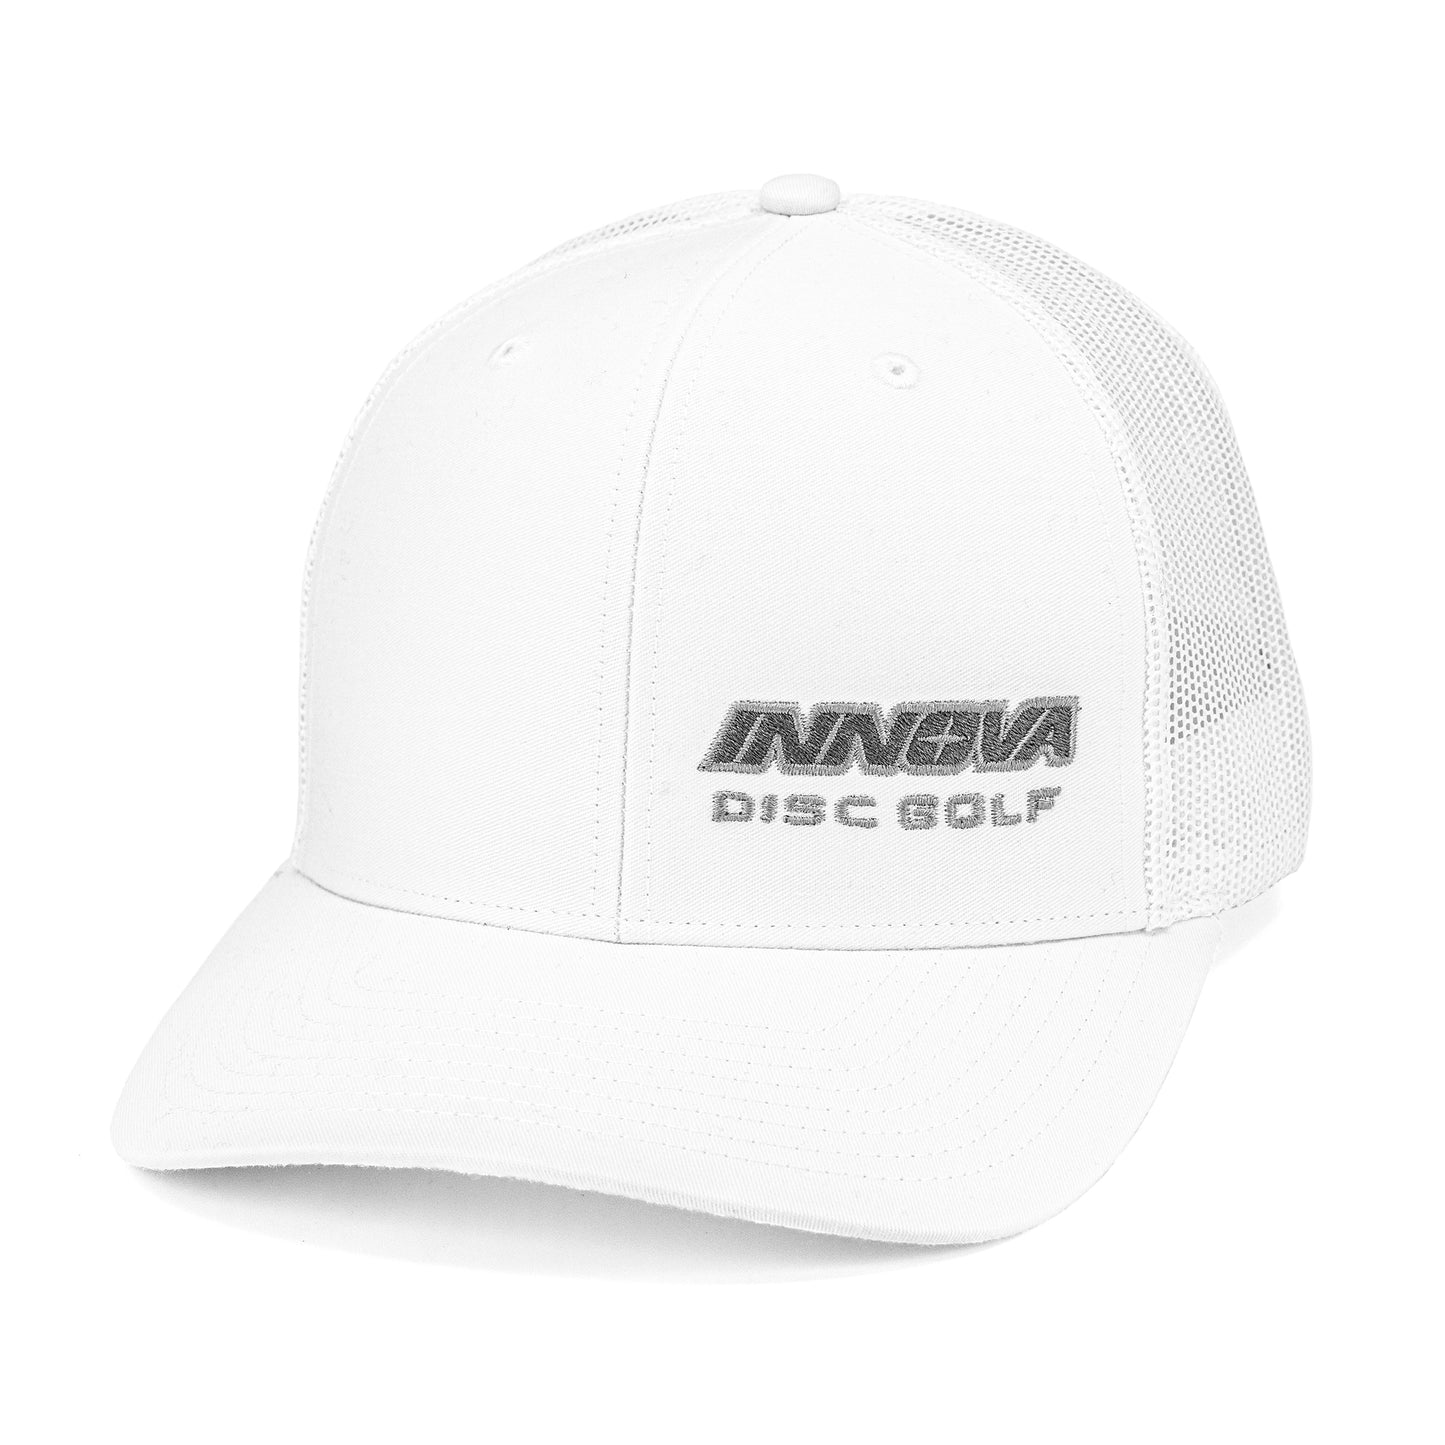 Innova Snapback Mesh Cap Hat